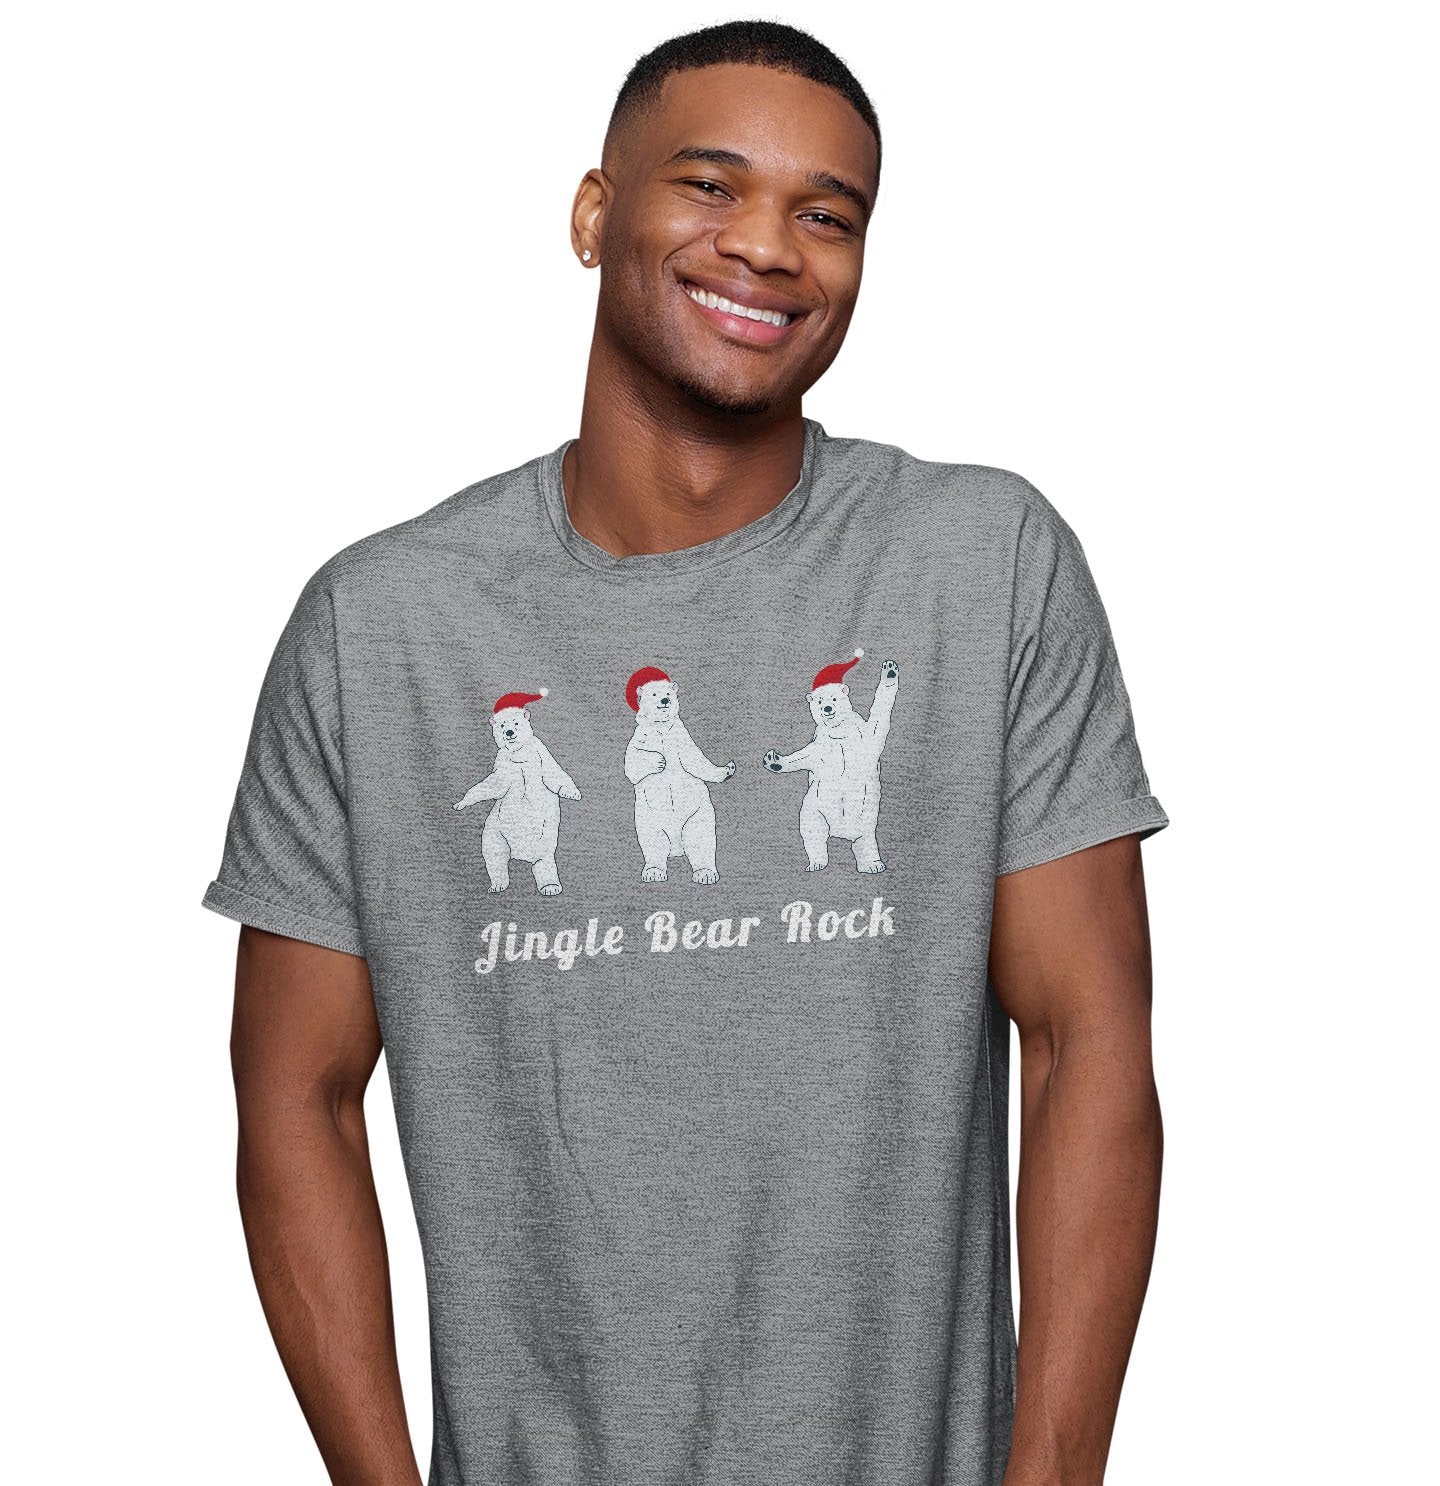 Jingle Bear Rock - Adult Unisex T-Shirt